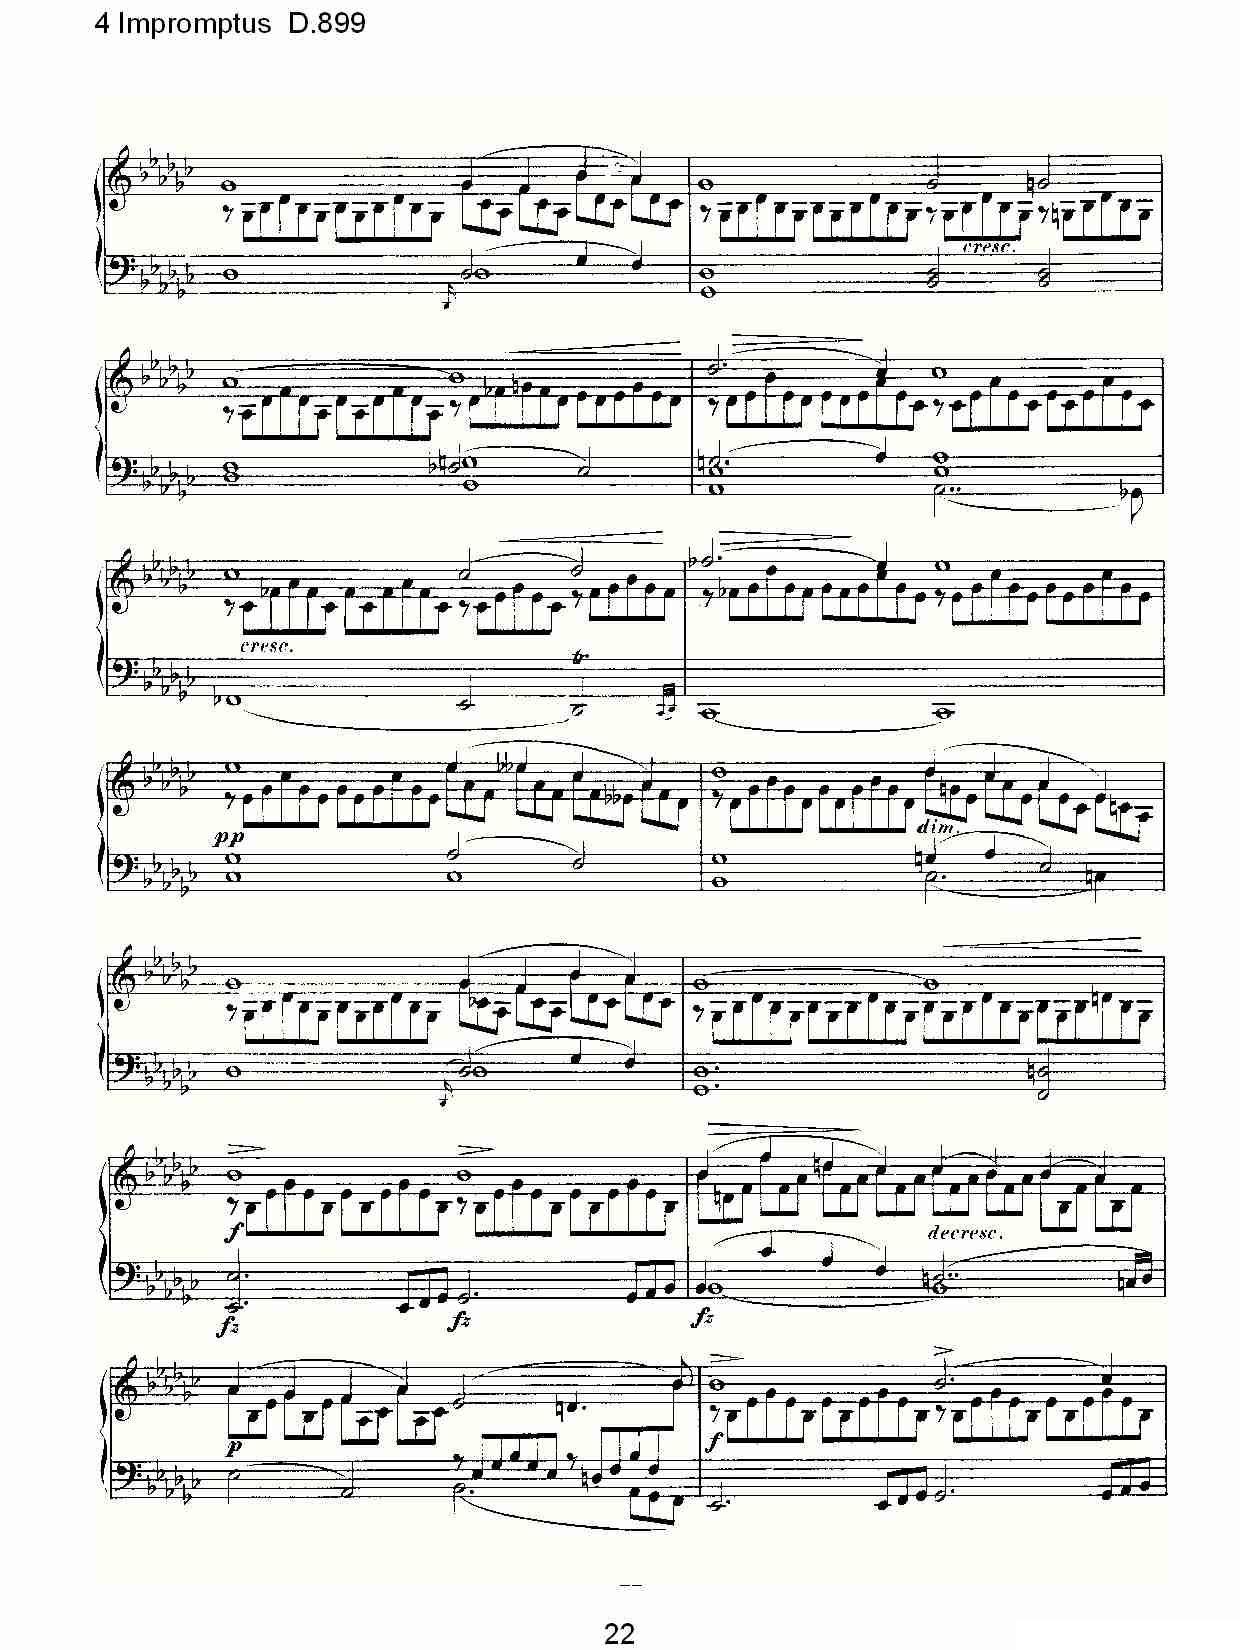 4 Impromptus D.899（4人即兴演奏 D.899）钢琴曲谱（图22）